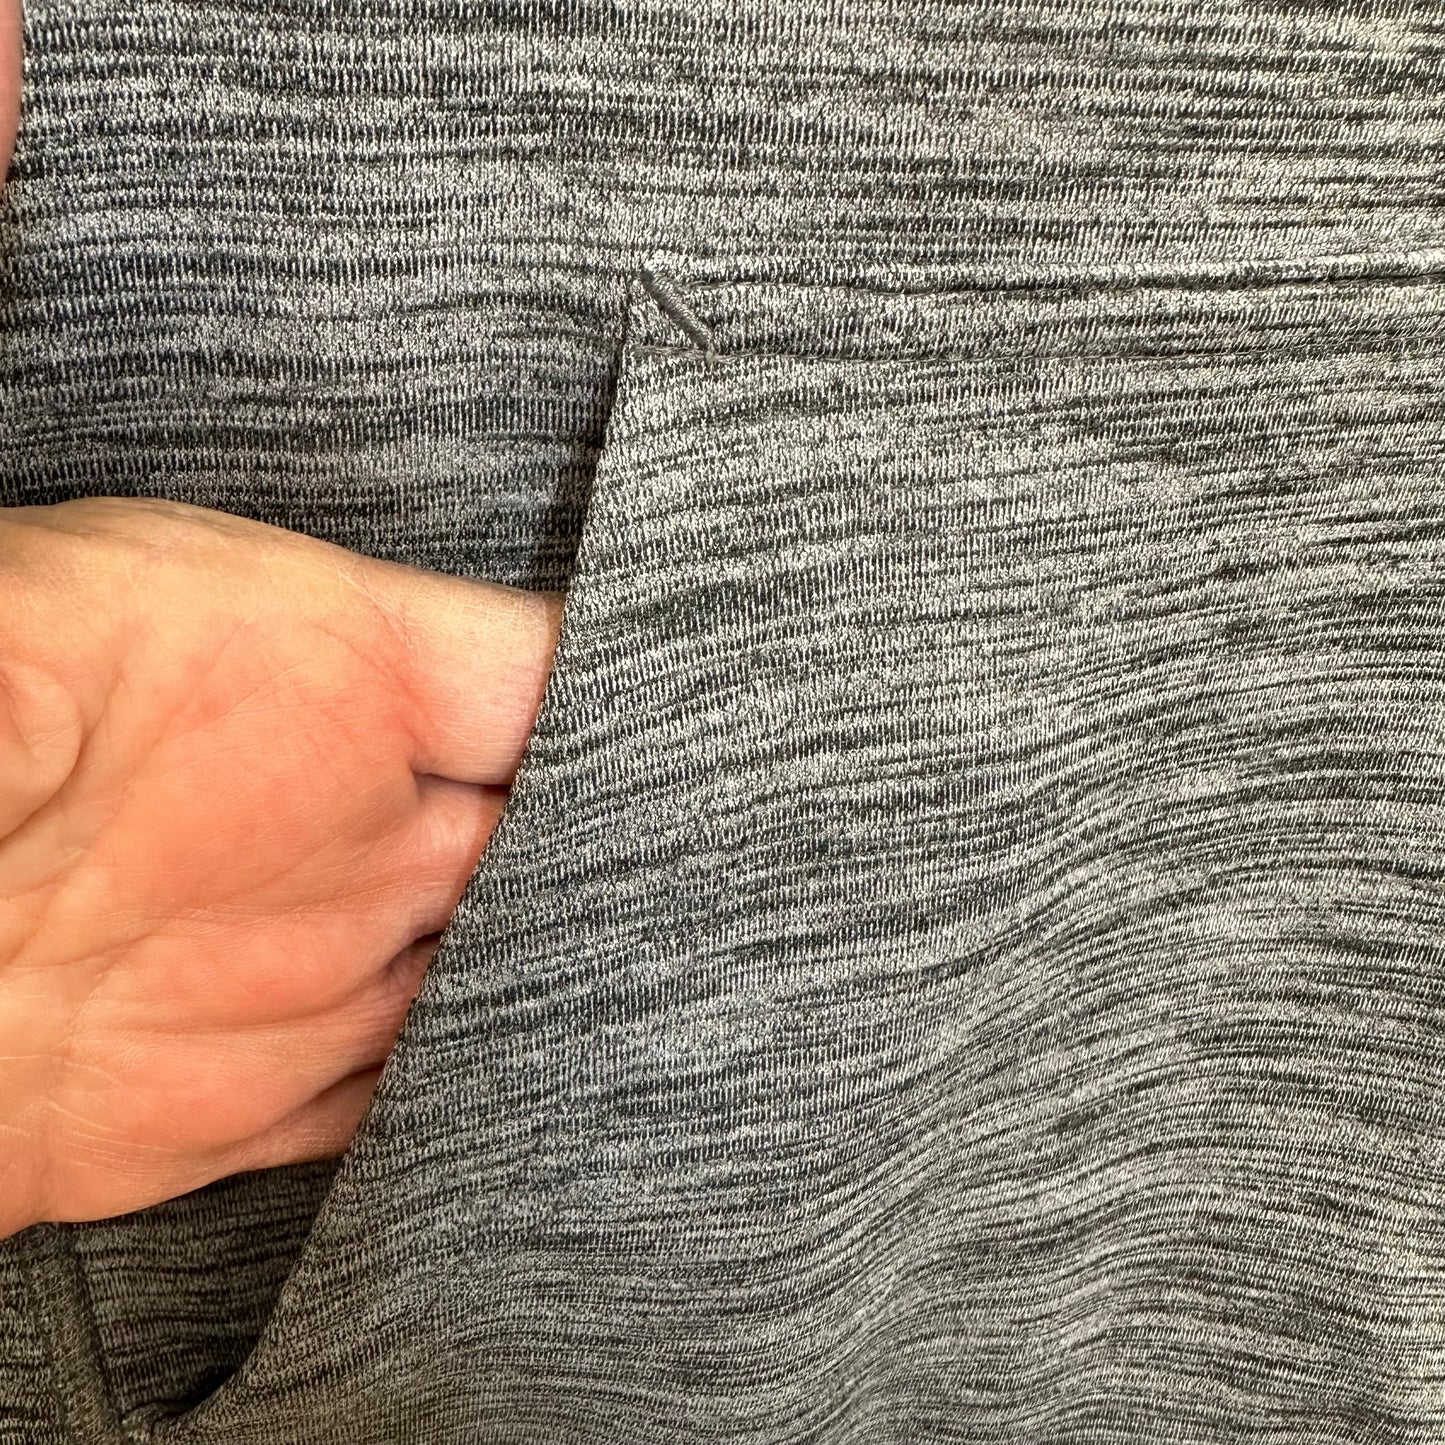 Grey Athletic Sweatshirt Crewneck Everlast, Size L